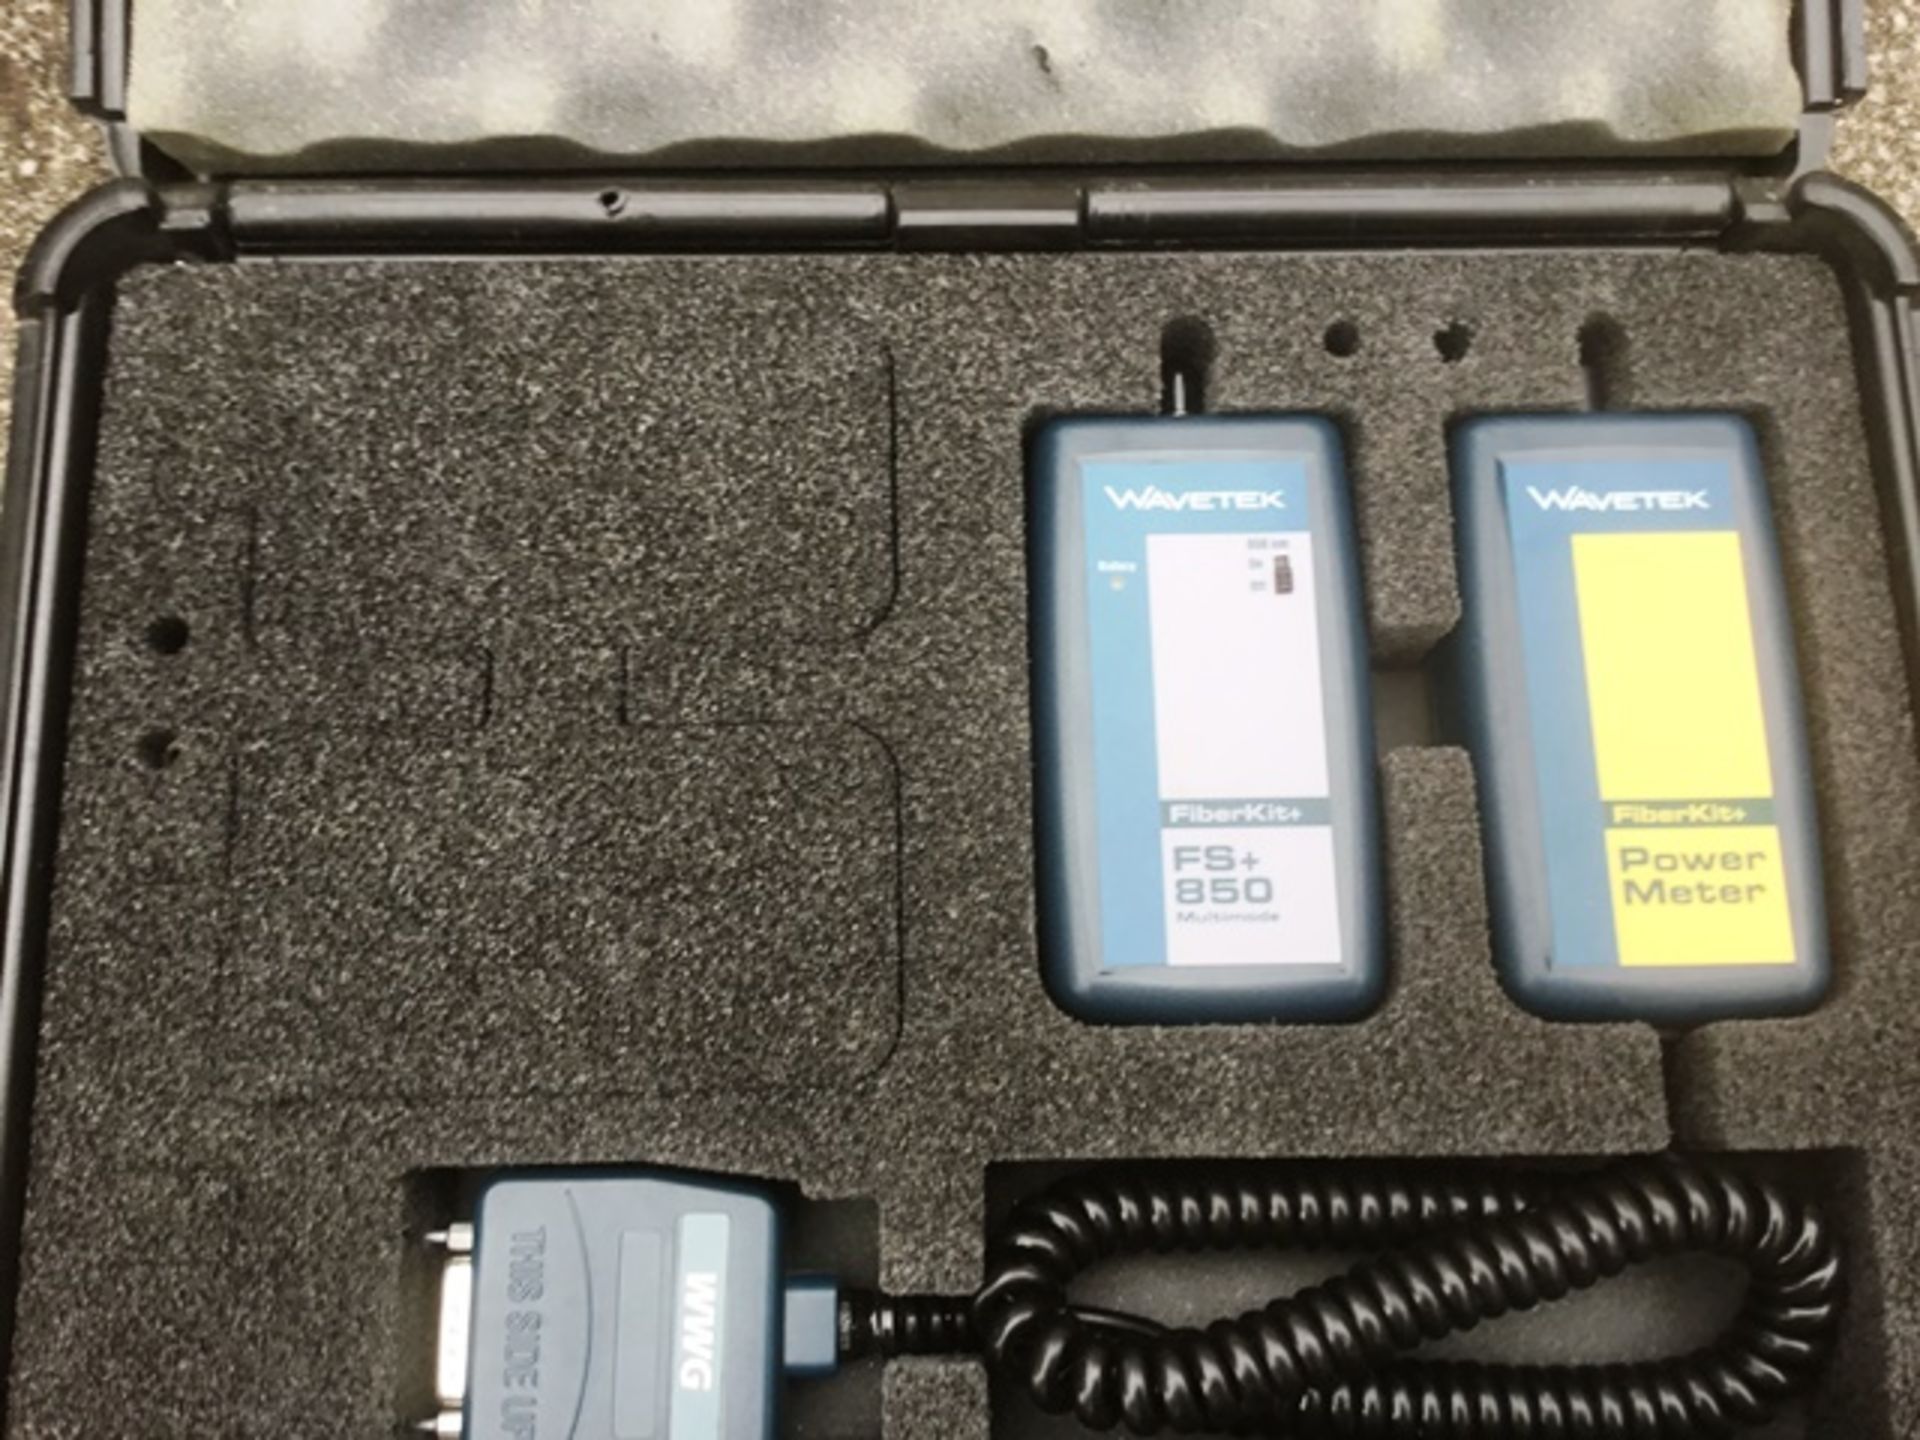 Wavetek Fibrekit Plus with FS+850 multimode and Fibrekit Power meter, with carry case (year of - Bild 3 aus 3